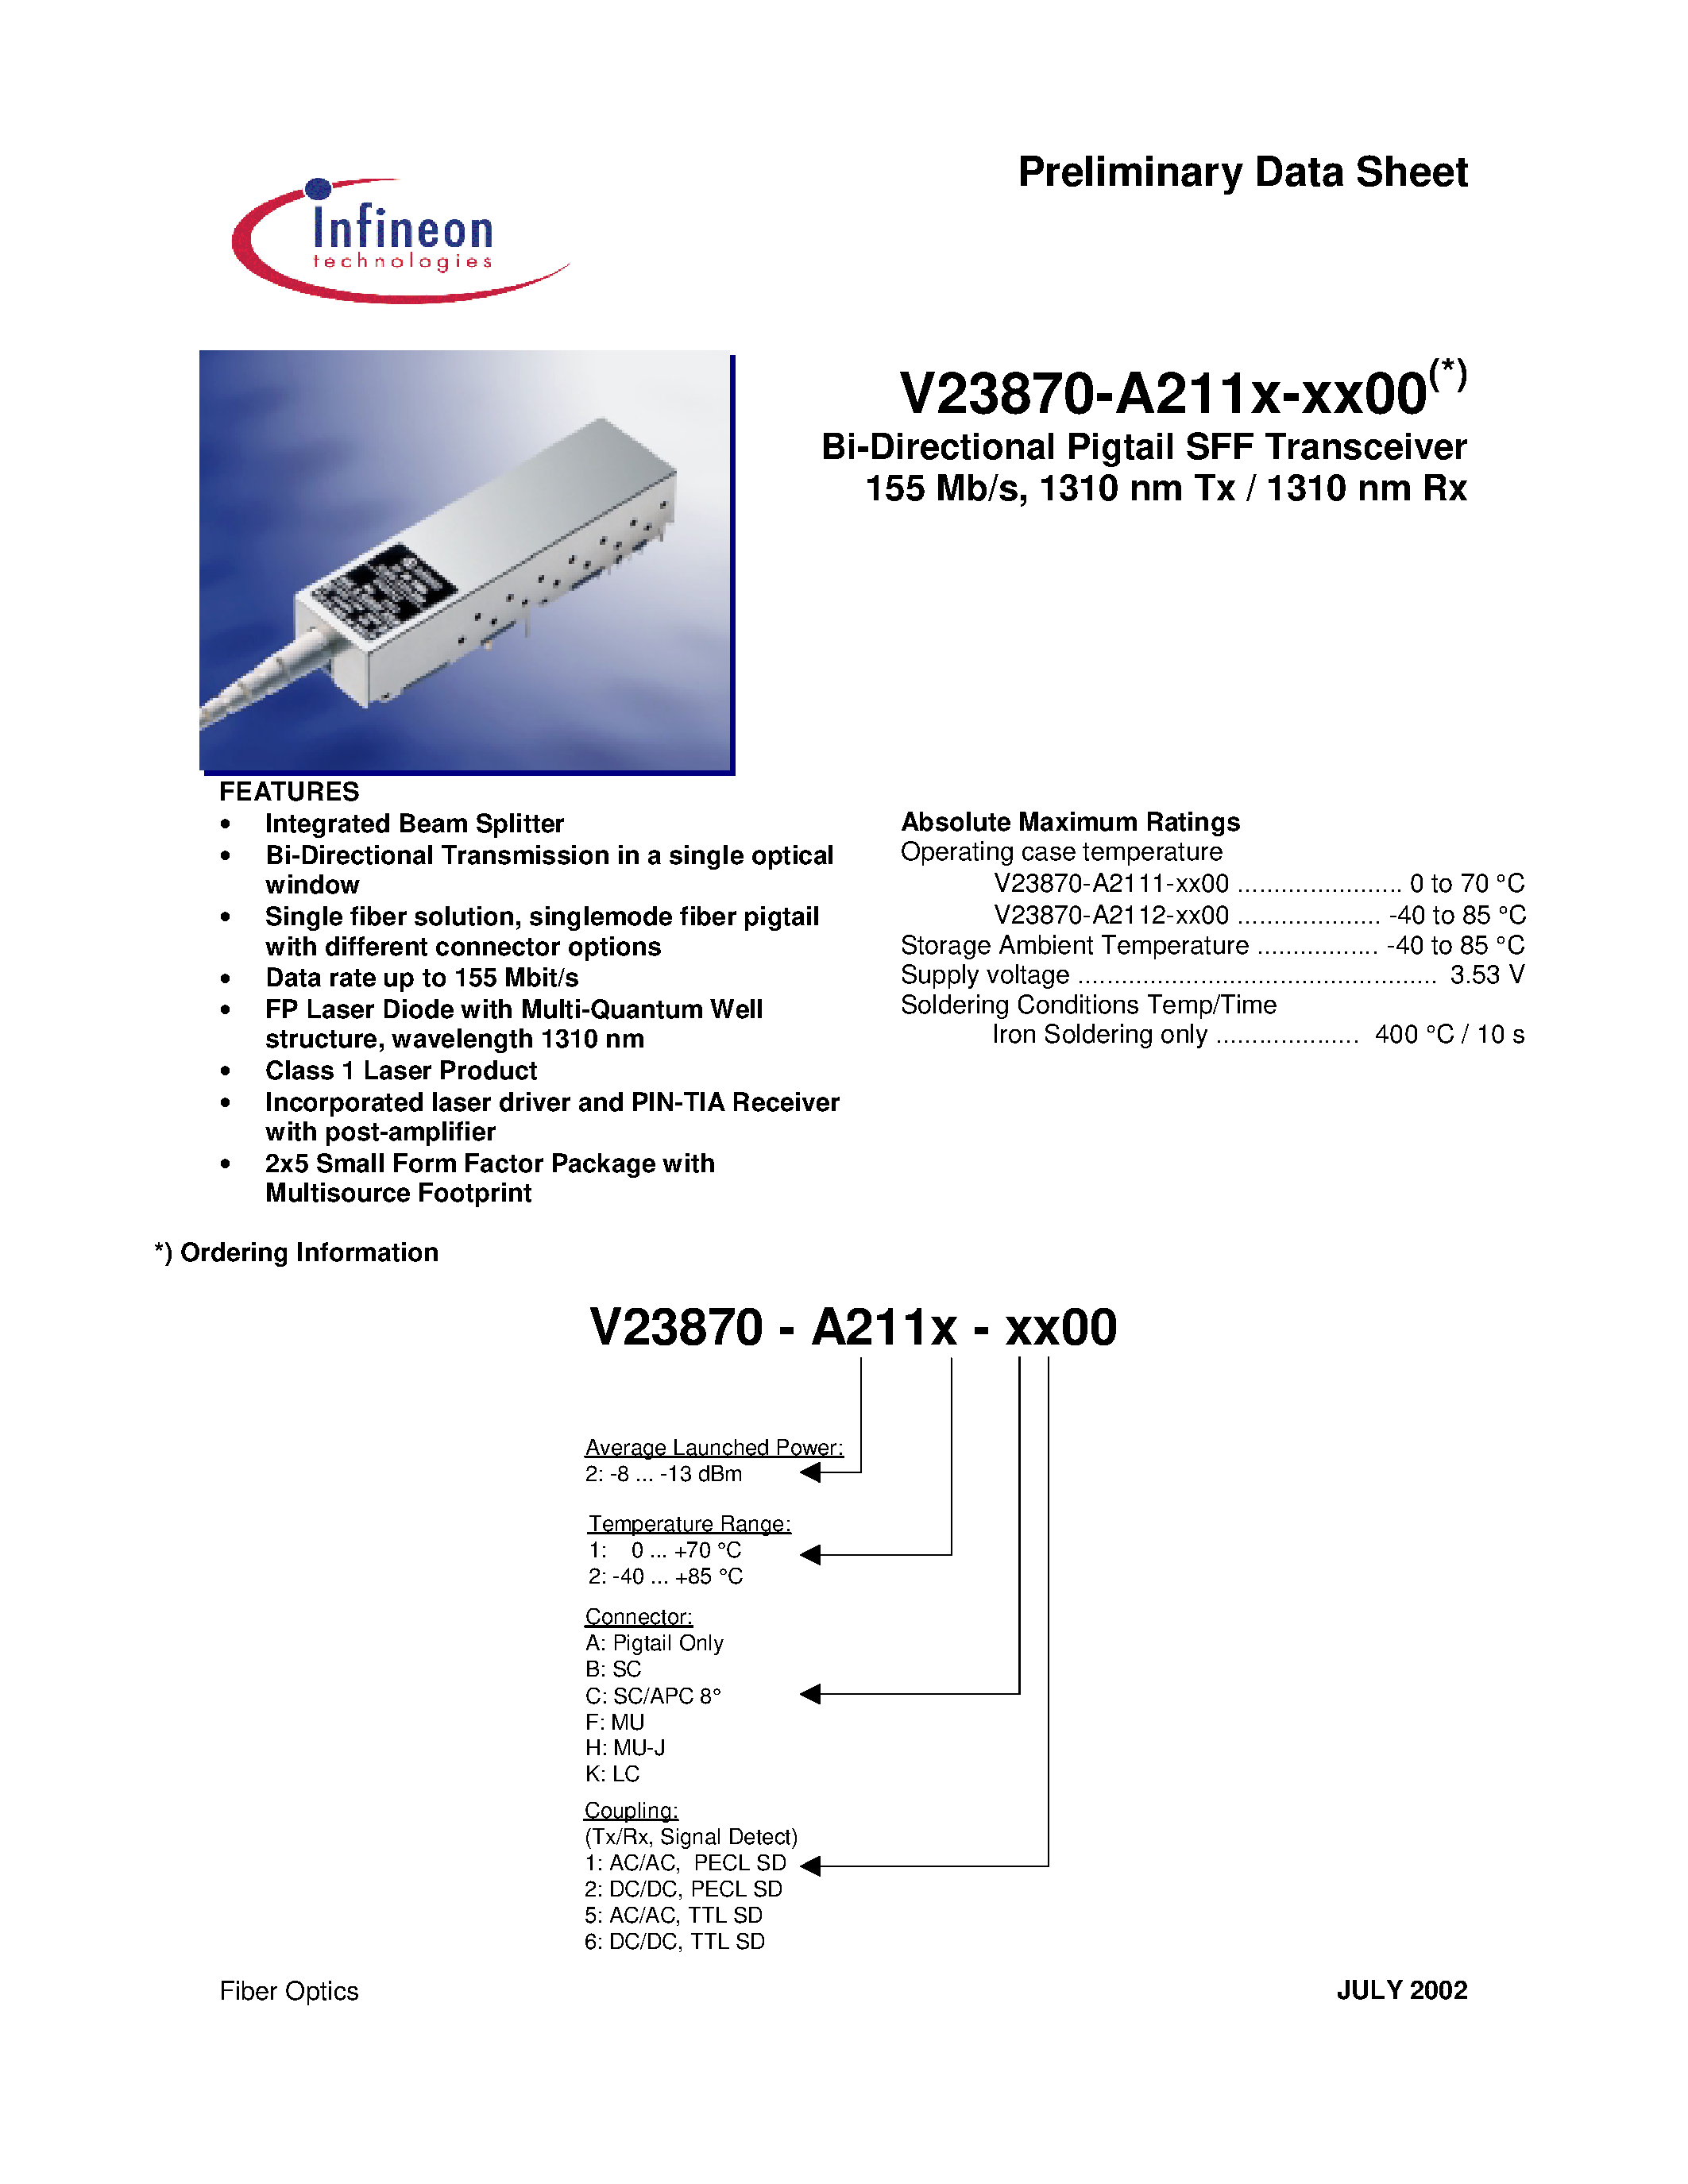 Даташит V23870-A2111-A600 - Bi-Directional Pigtail SFF Transceiver 155 Mb/s/ 1310 nm Tx / 1310 nm Rx страница 1